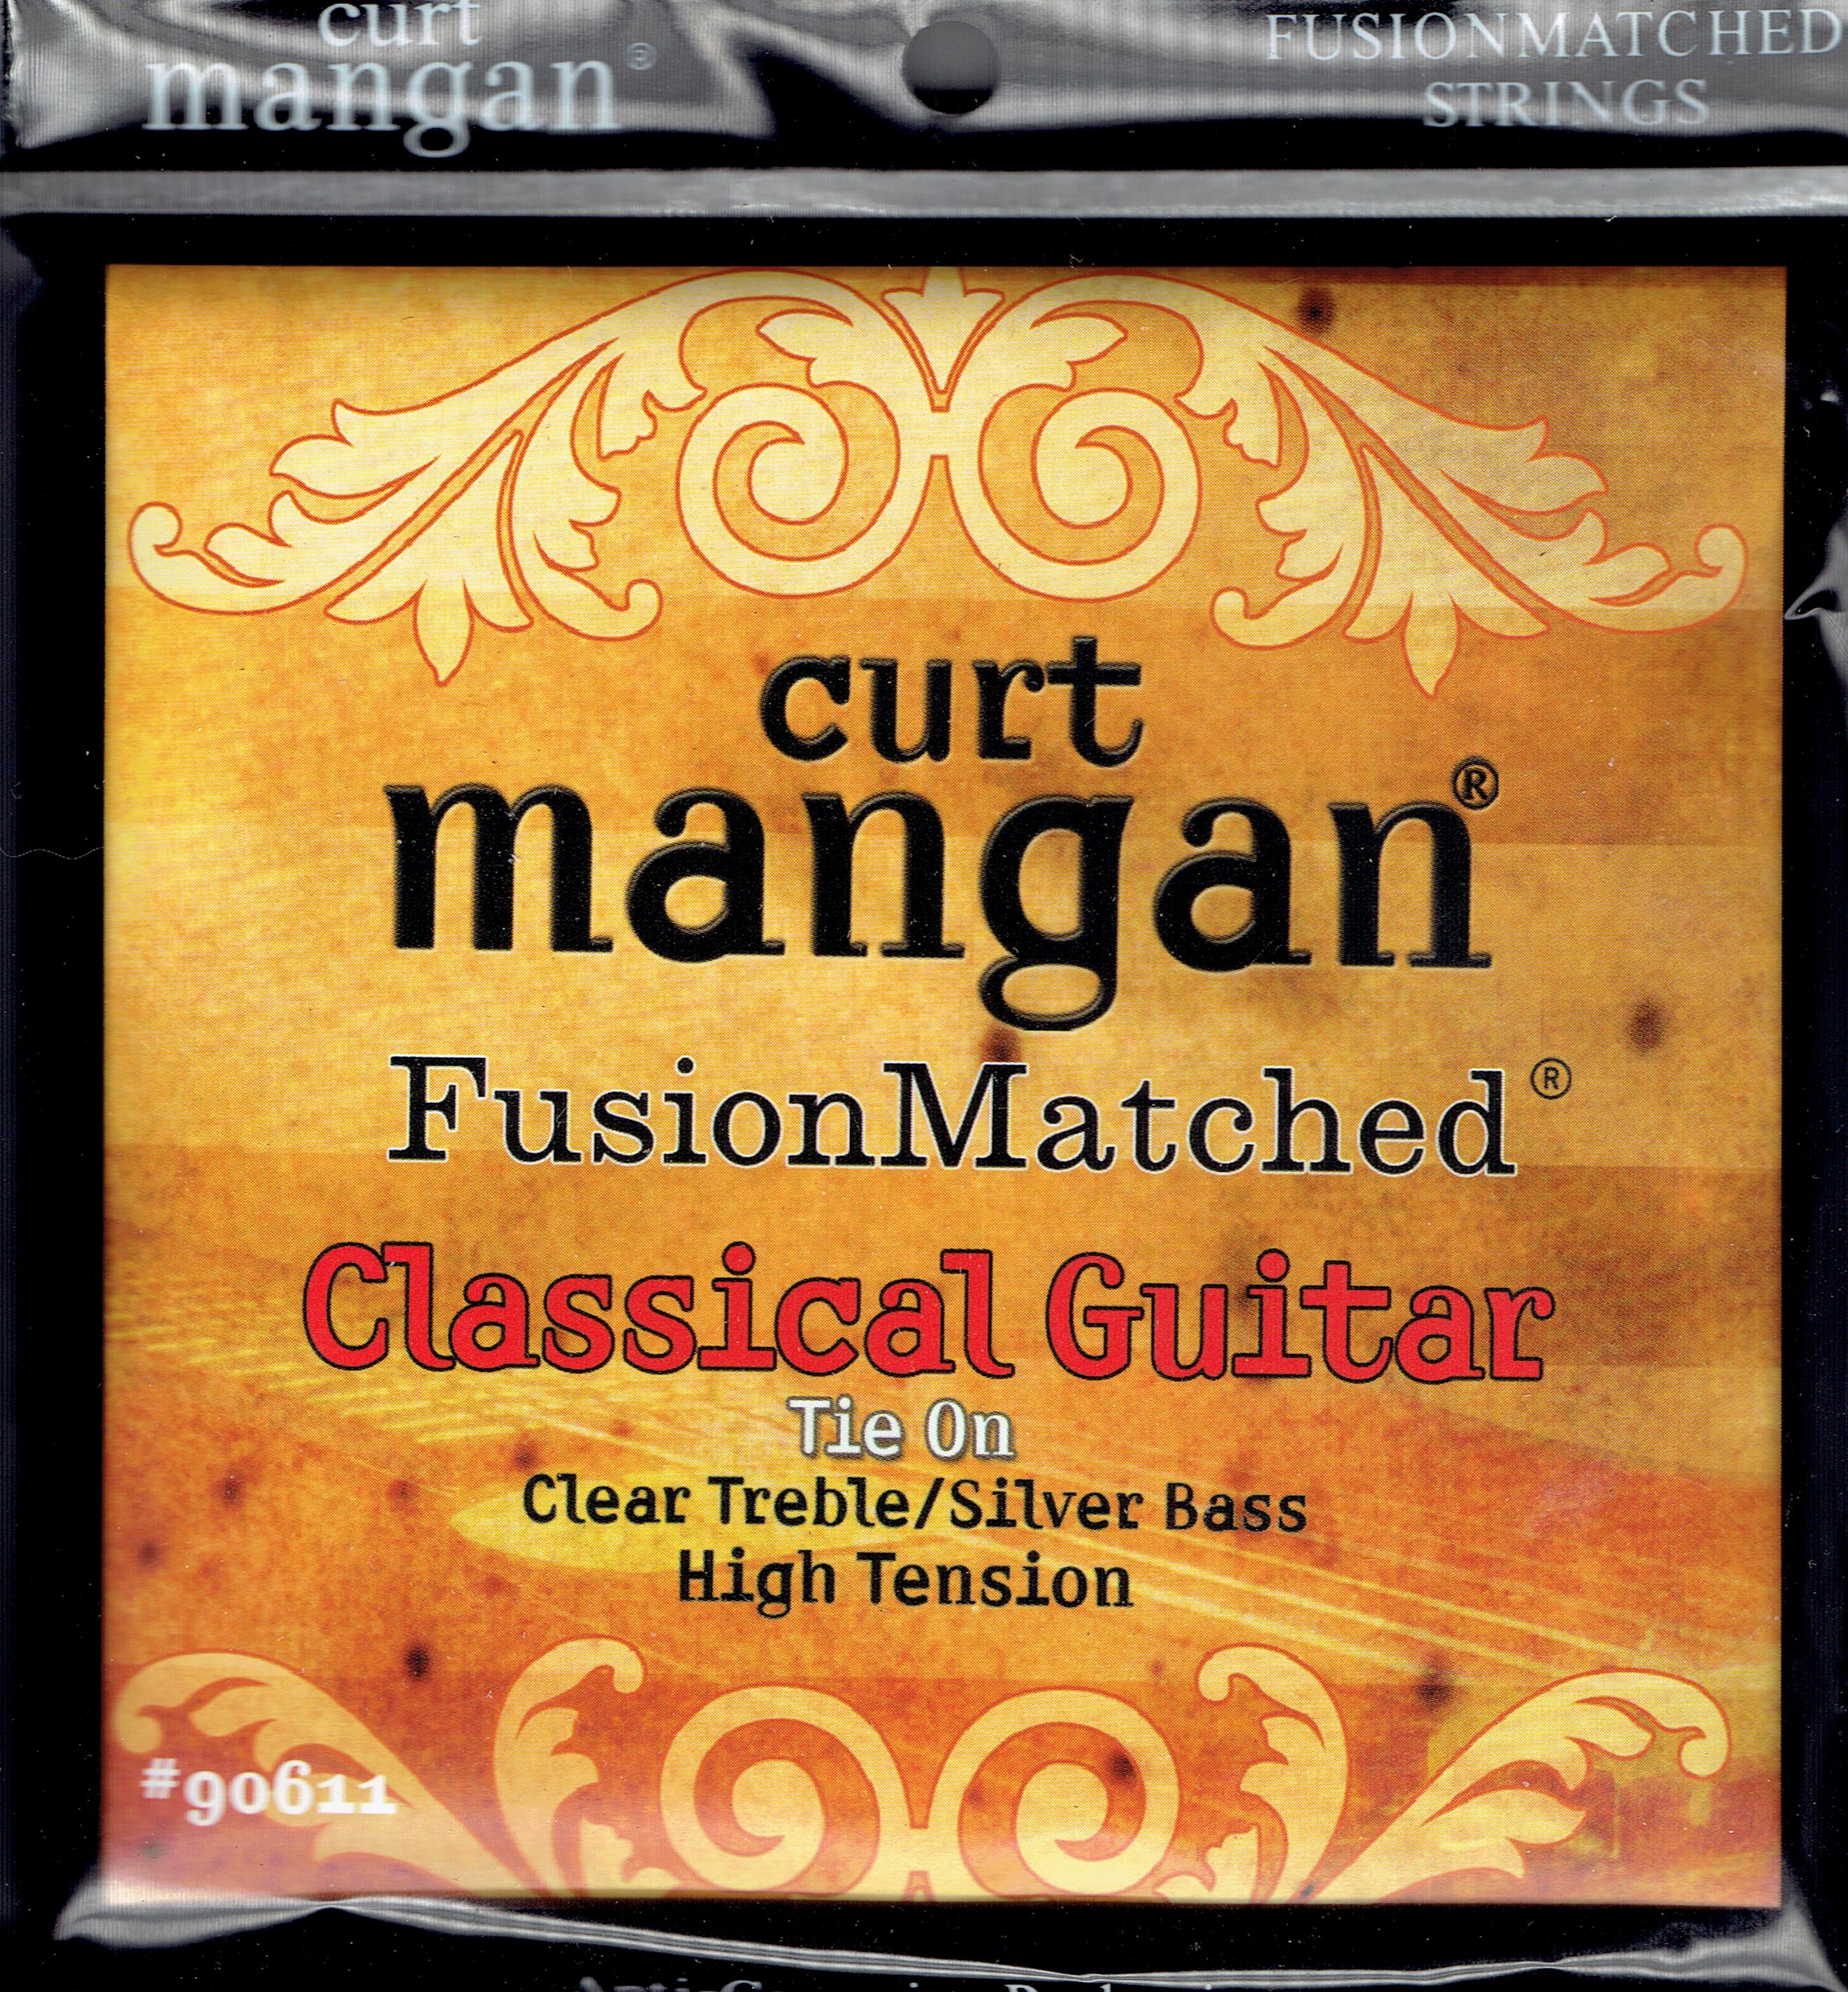 Curt Mangan Classical guitar strings high tension tie on